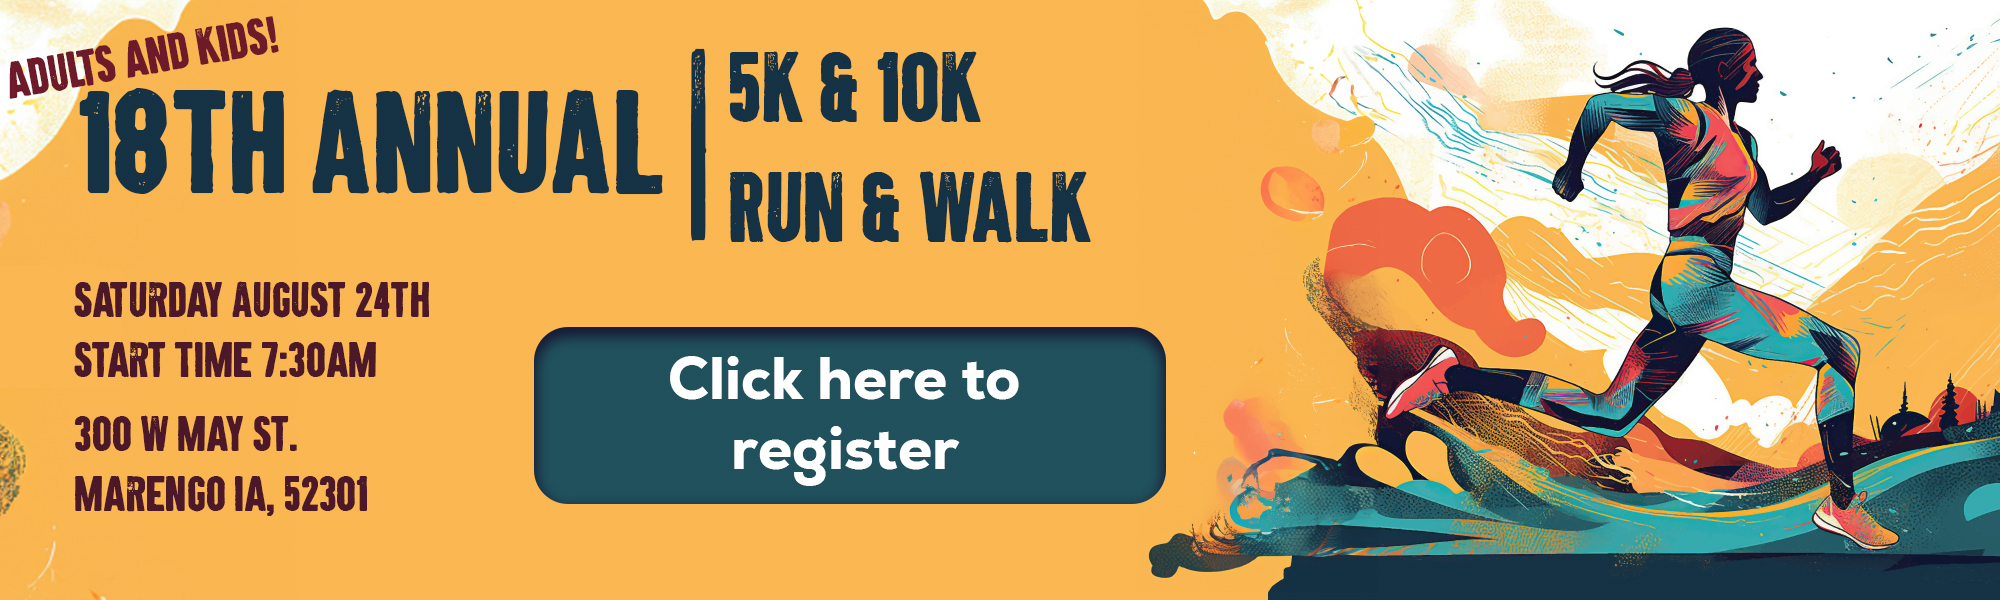 18th Annual Run/Walk 5K and 10K Race Registration